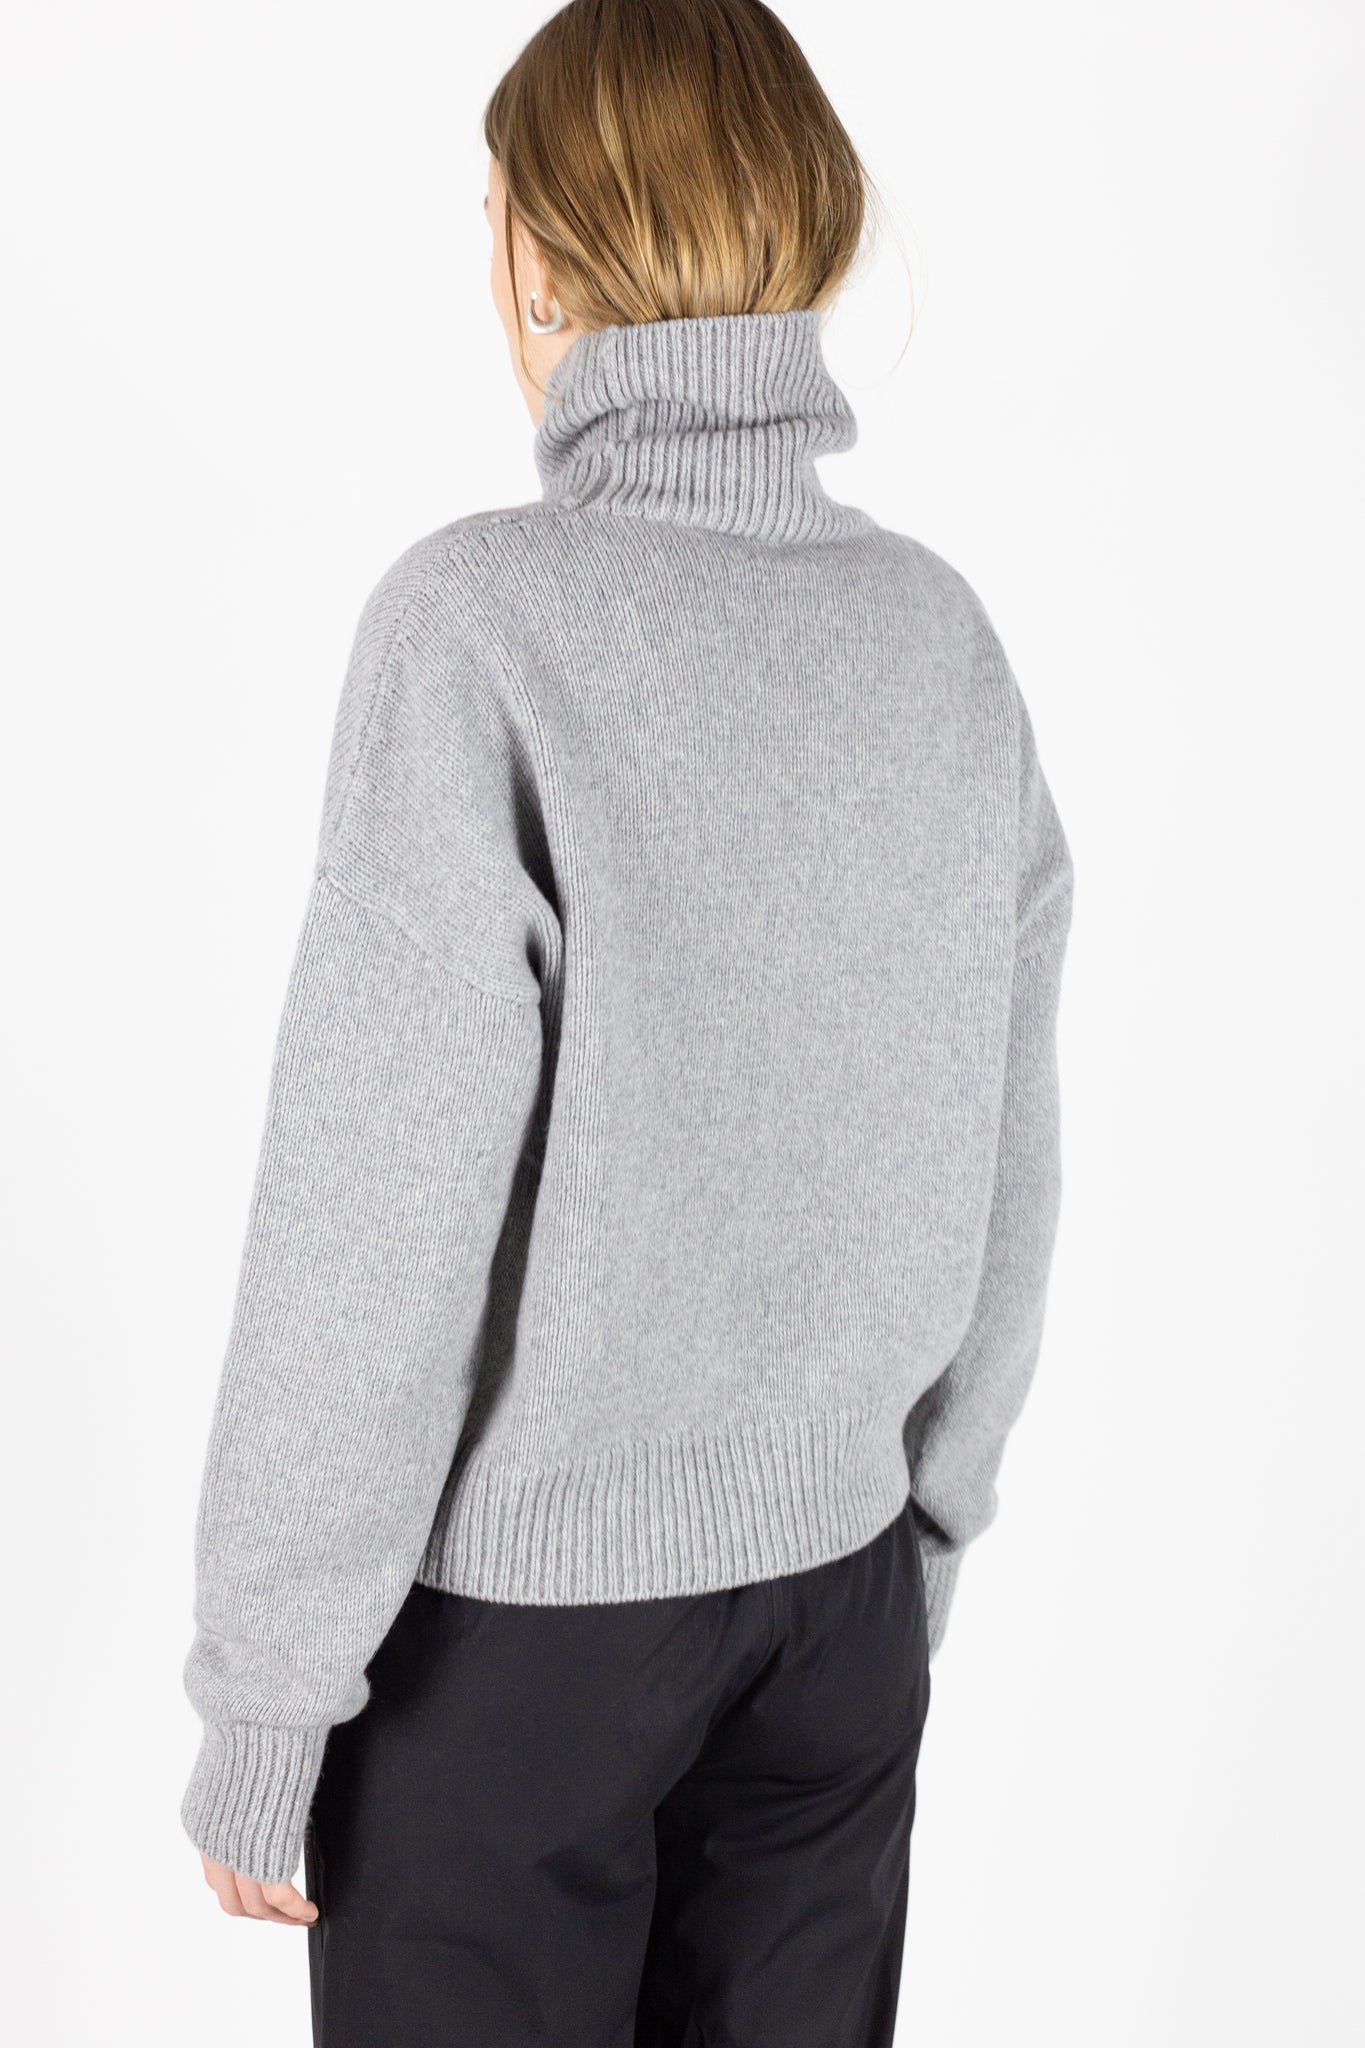 Roll neck grey cashmere knitwear.